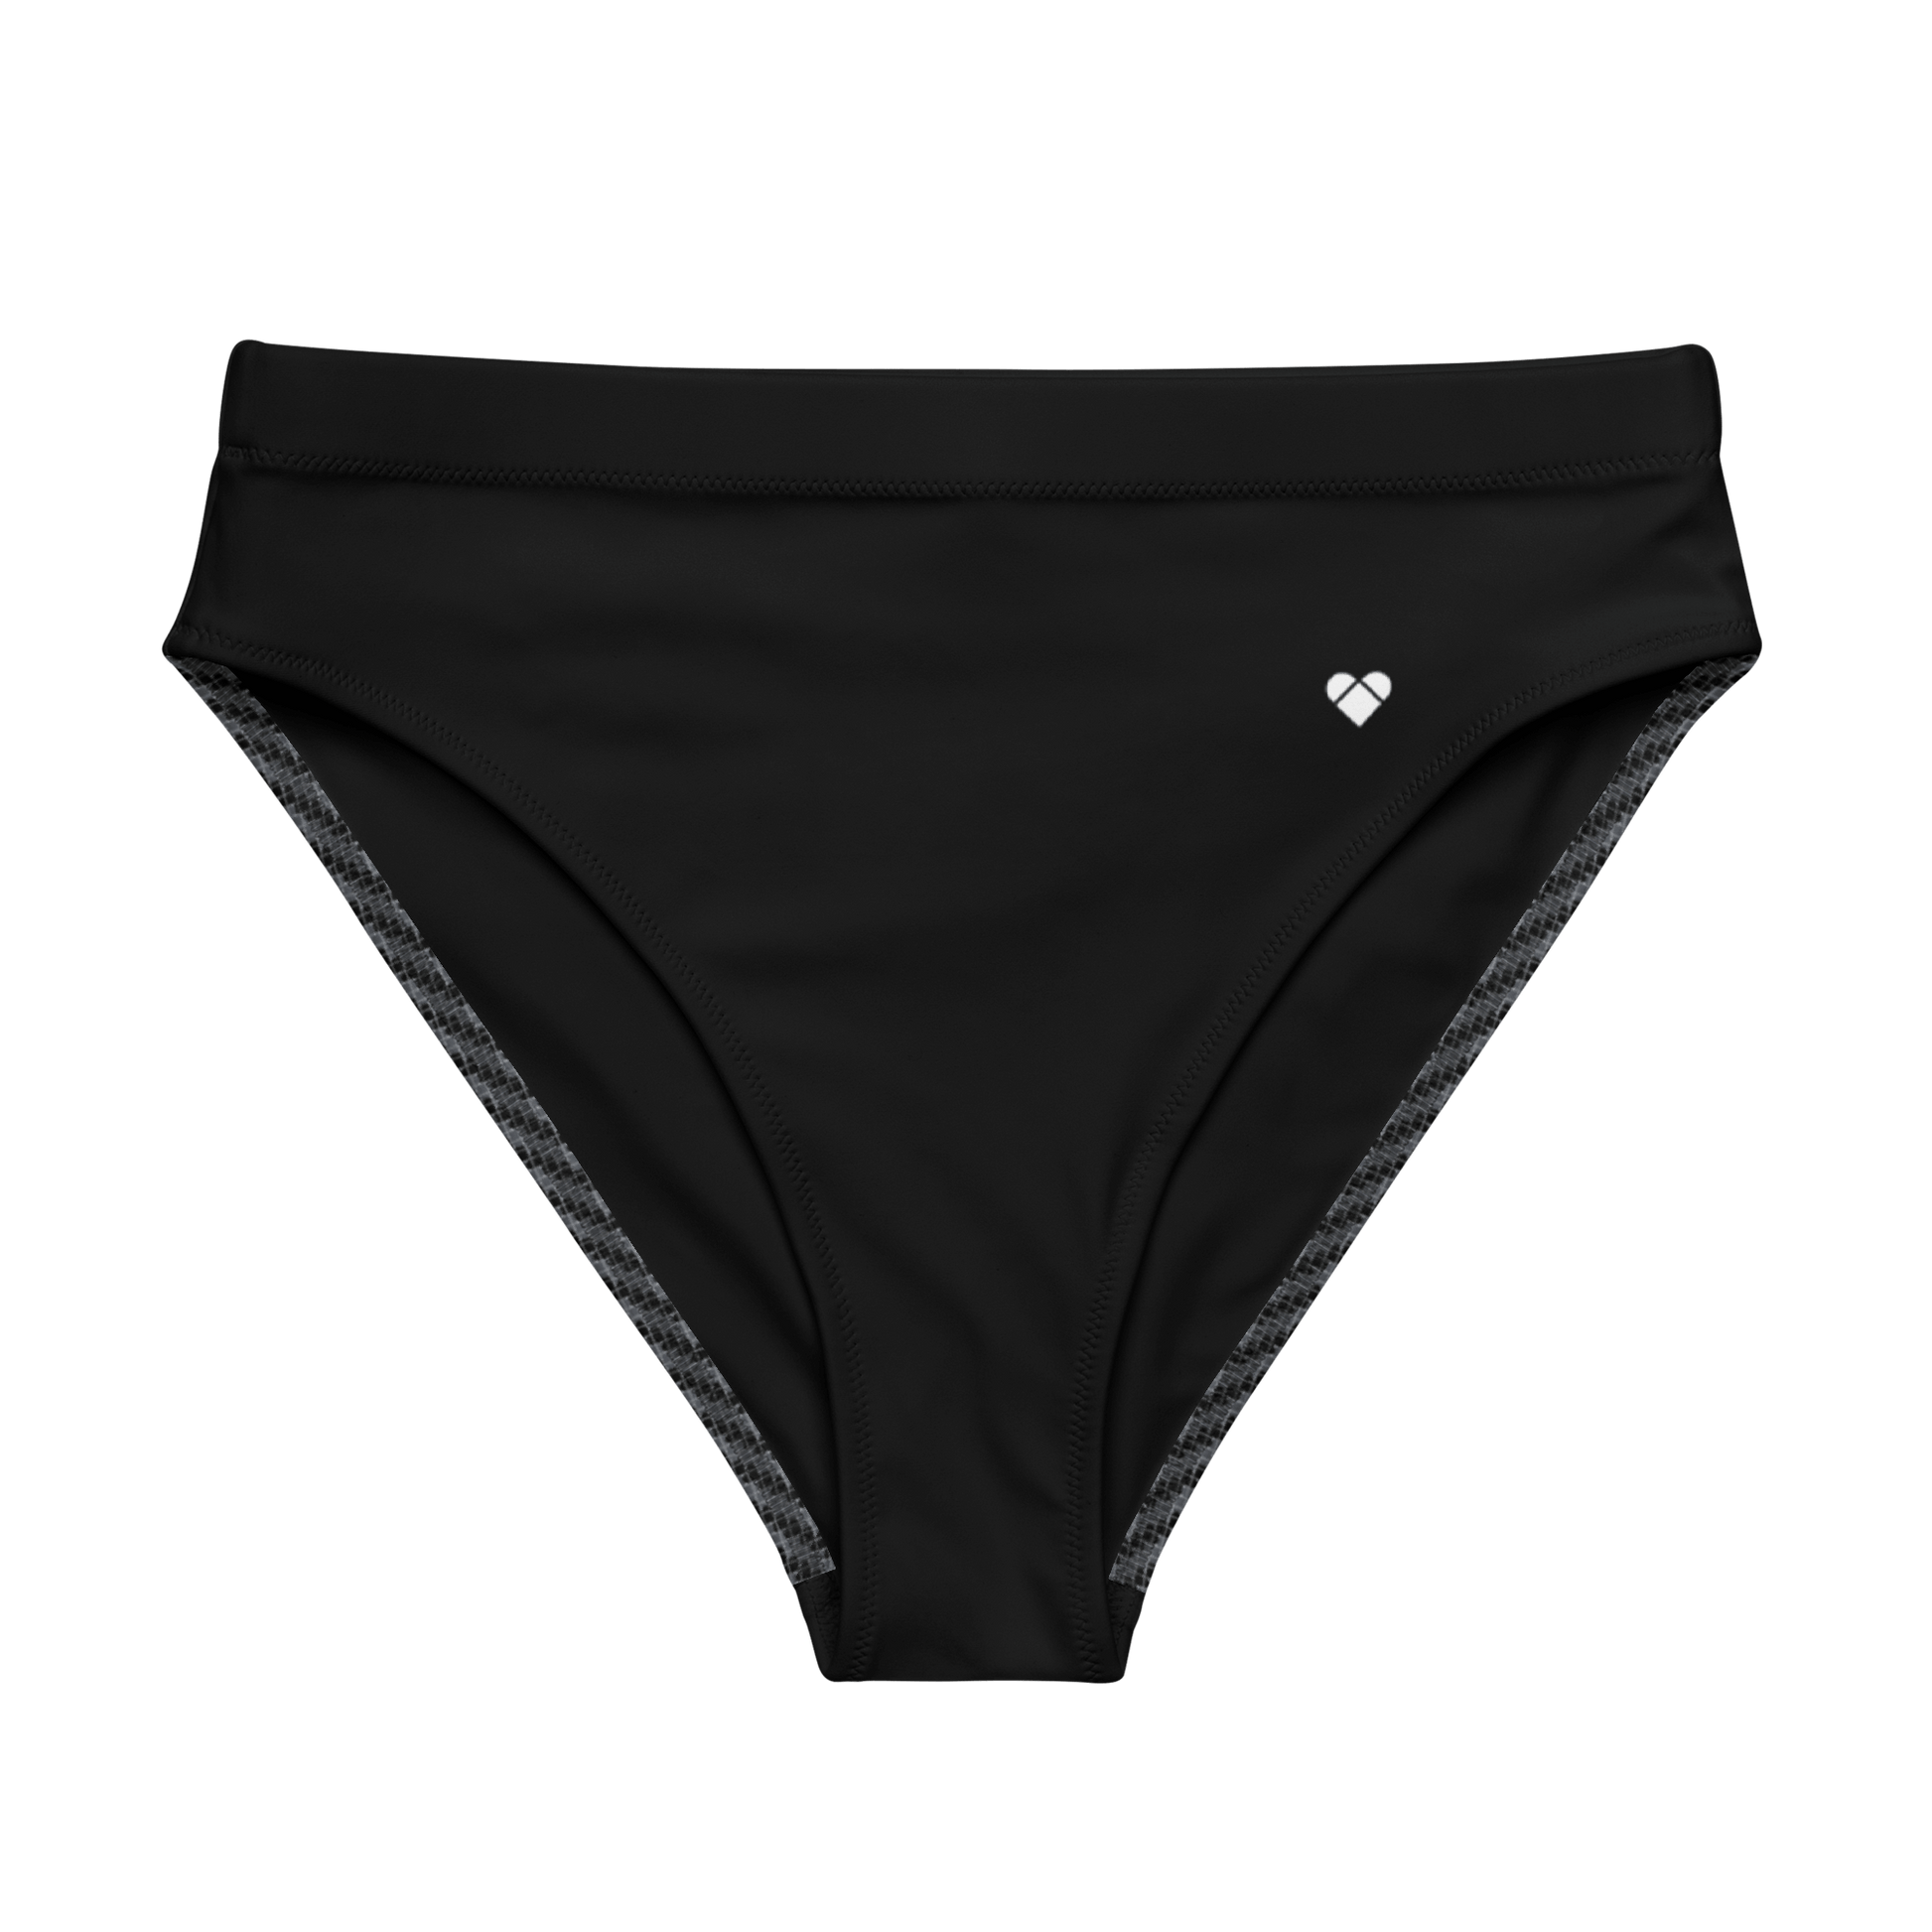 Black high-waisted bikini bottom with geometric lovogram pattern in two shades of gray